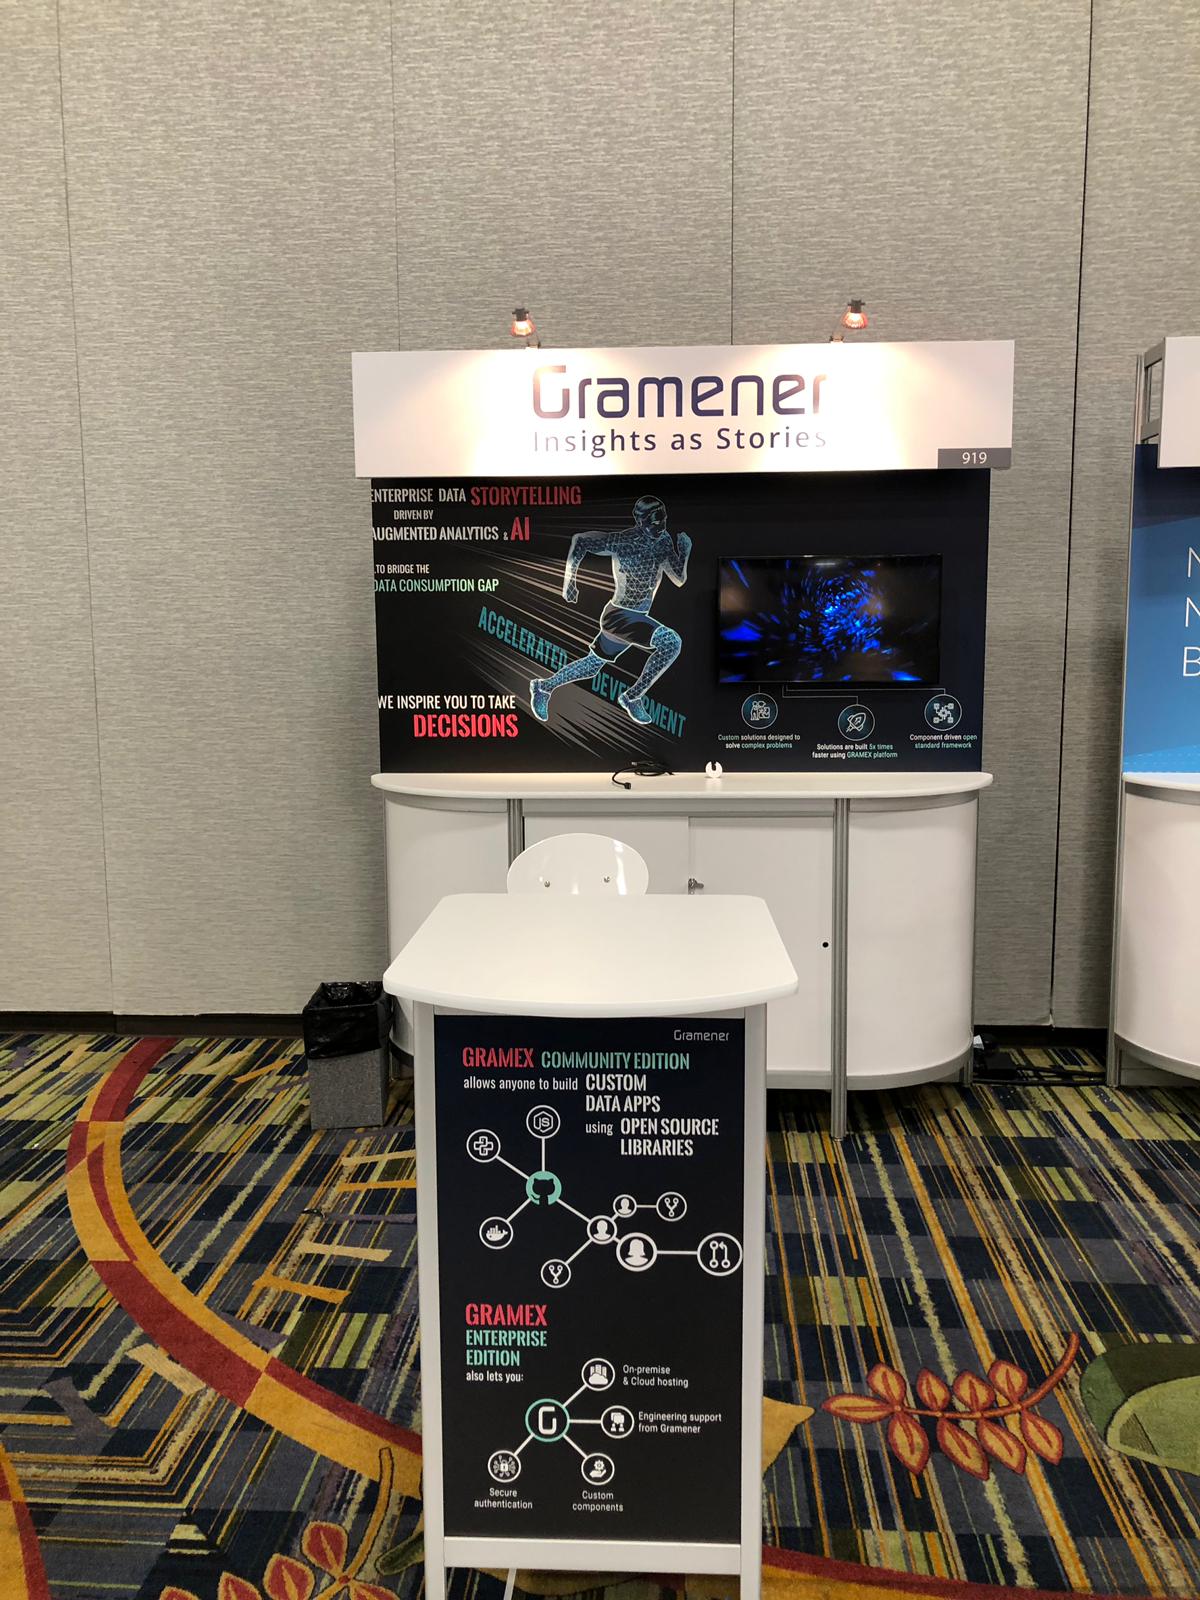 Gramener's booth at the Gartner Data and Analytics summit 2019, Orlando - Florida.